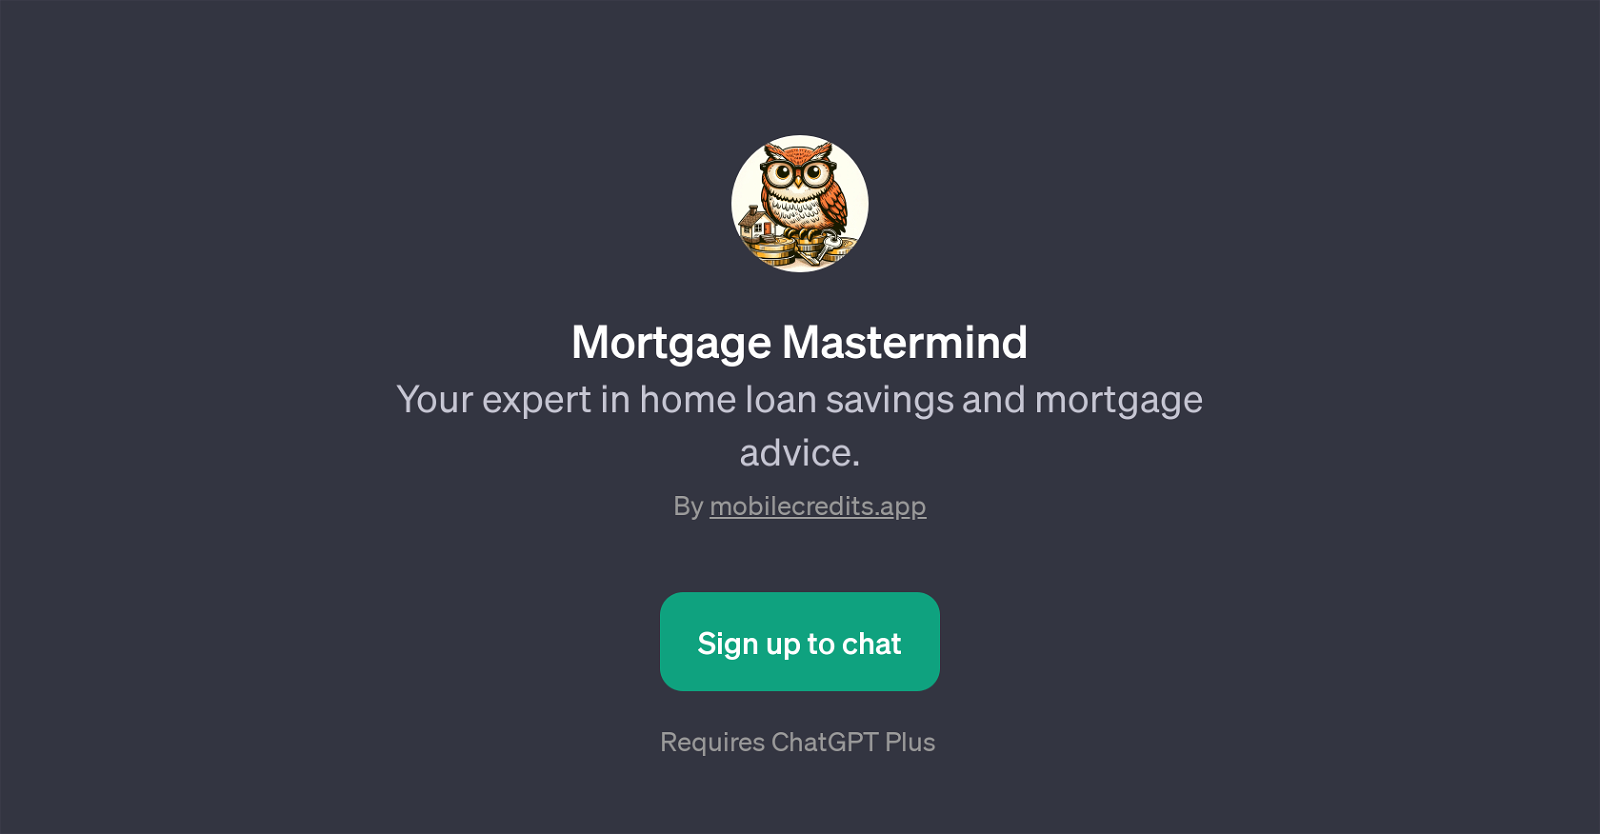 Mortgage Mastermind website